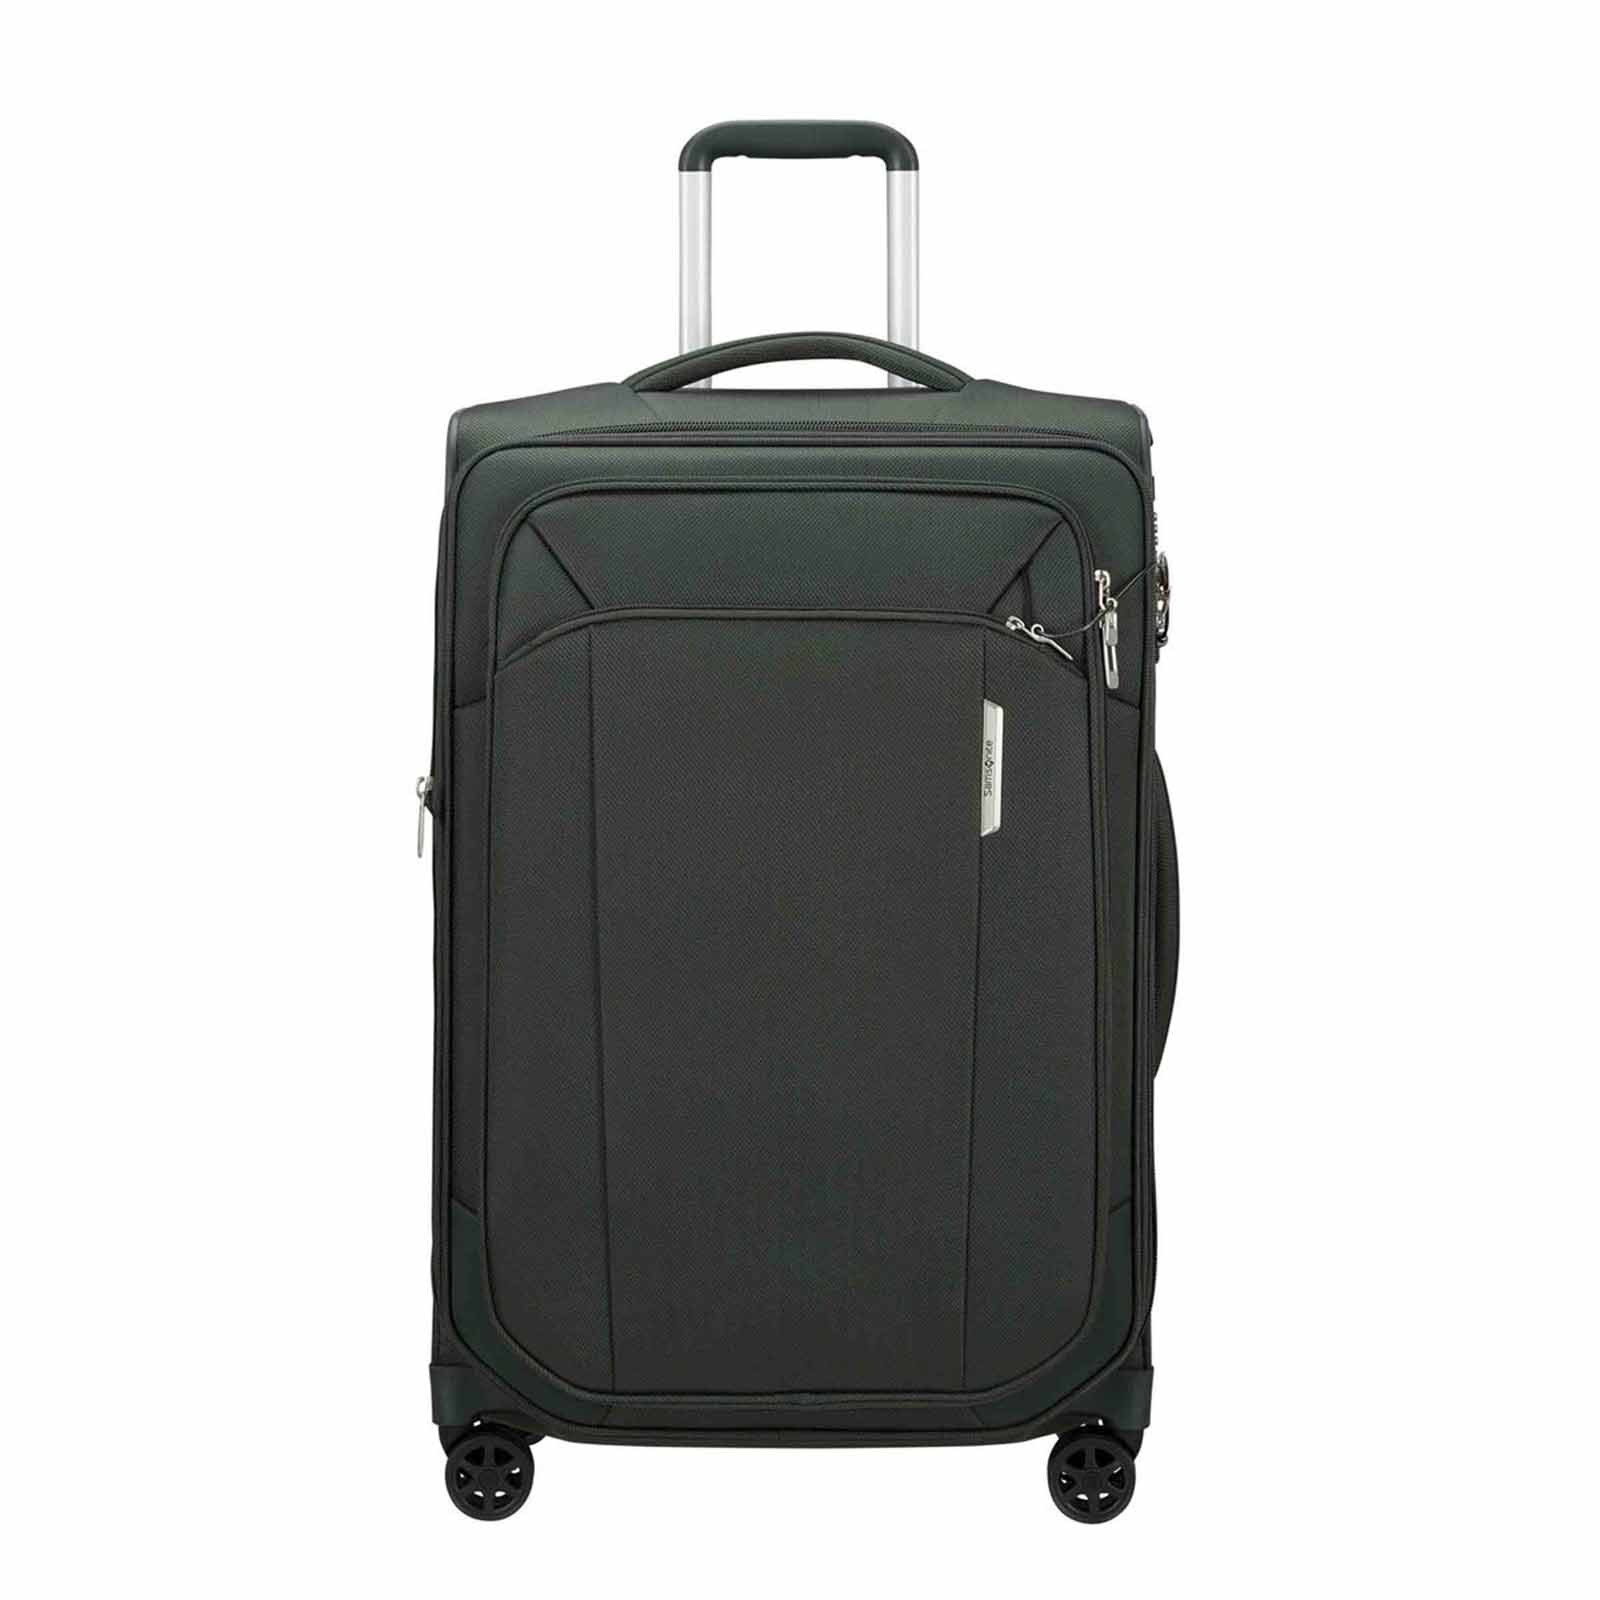 Samsonite-Respark-67cm-Suitcase-Forest-Green-Front